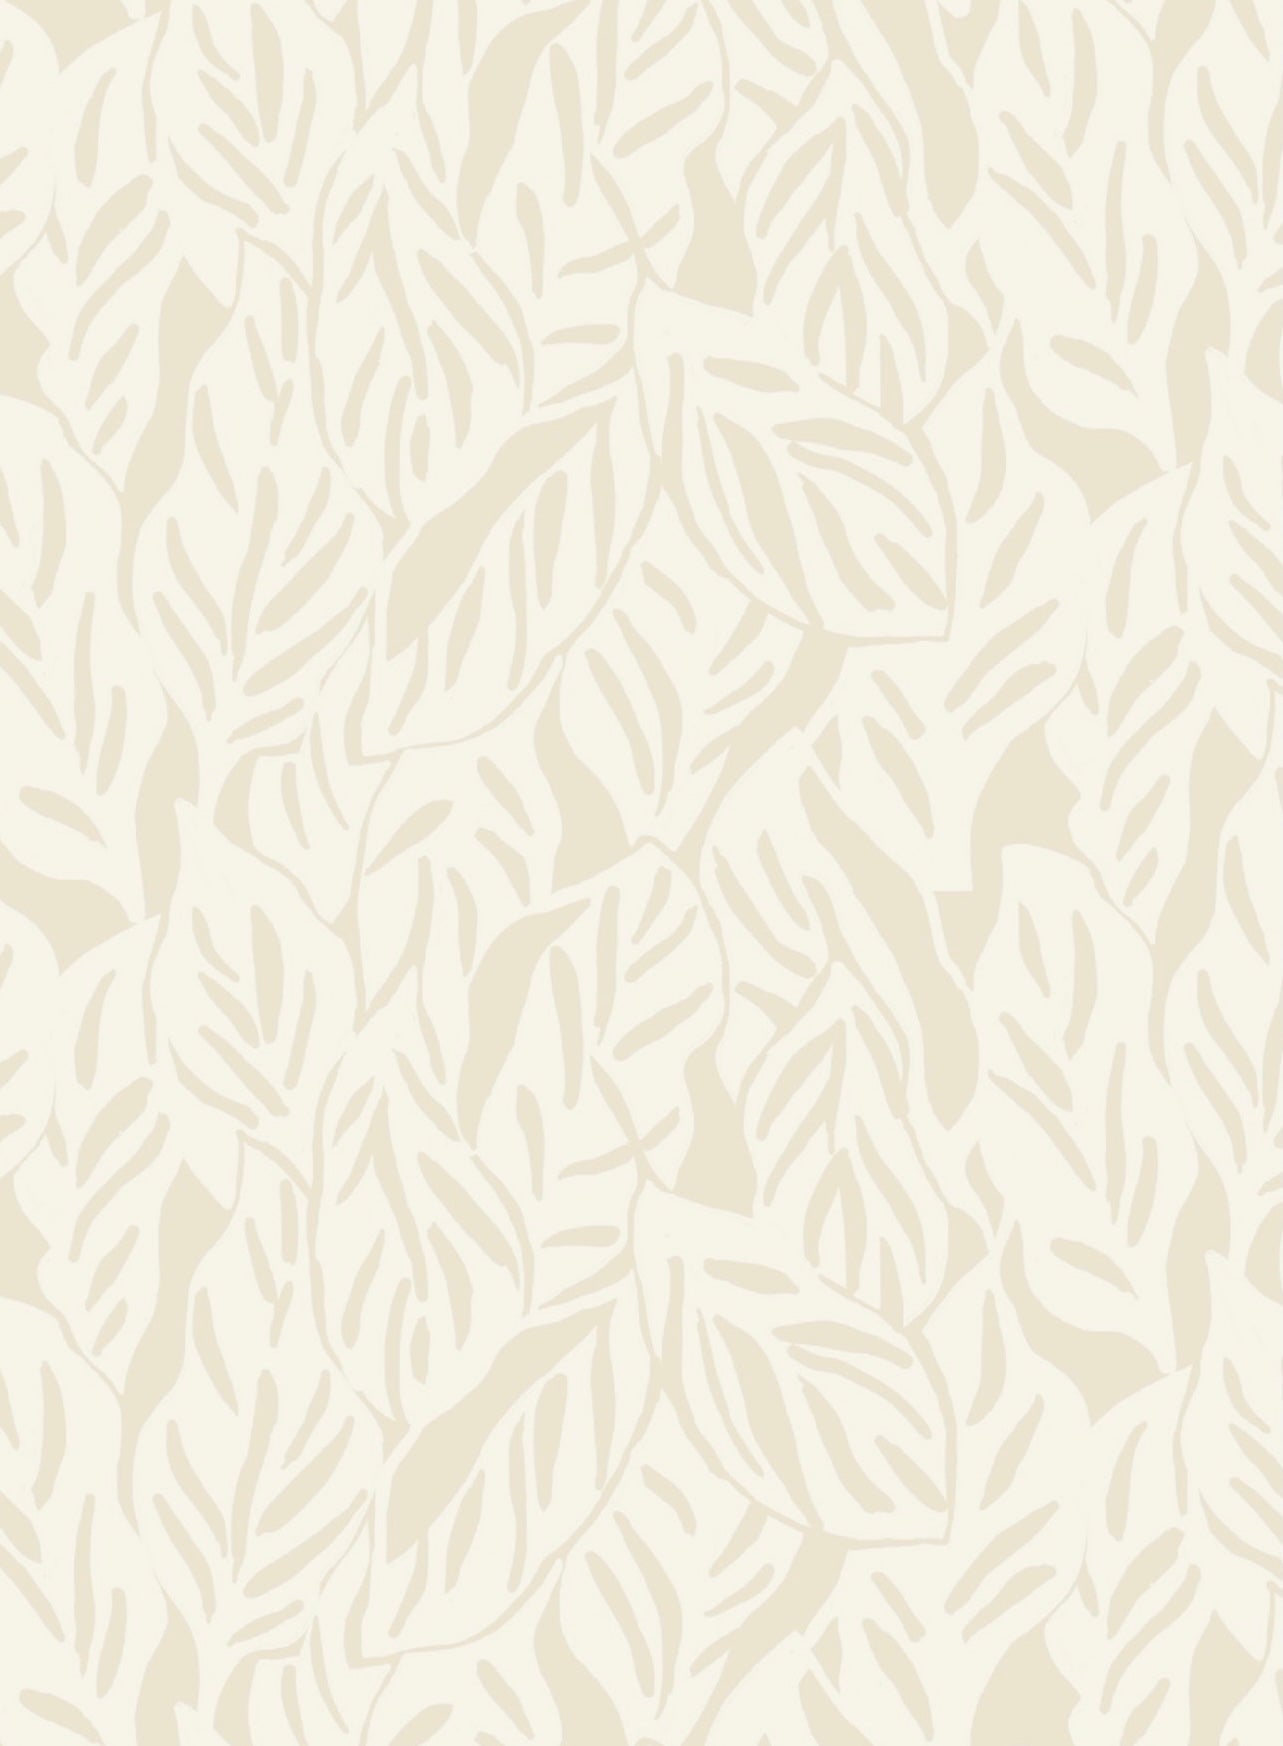 White Ivy Wallpaper